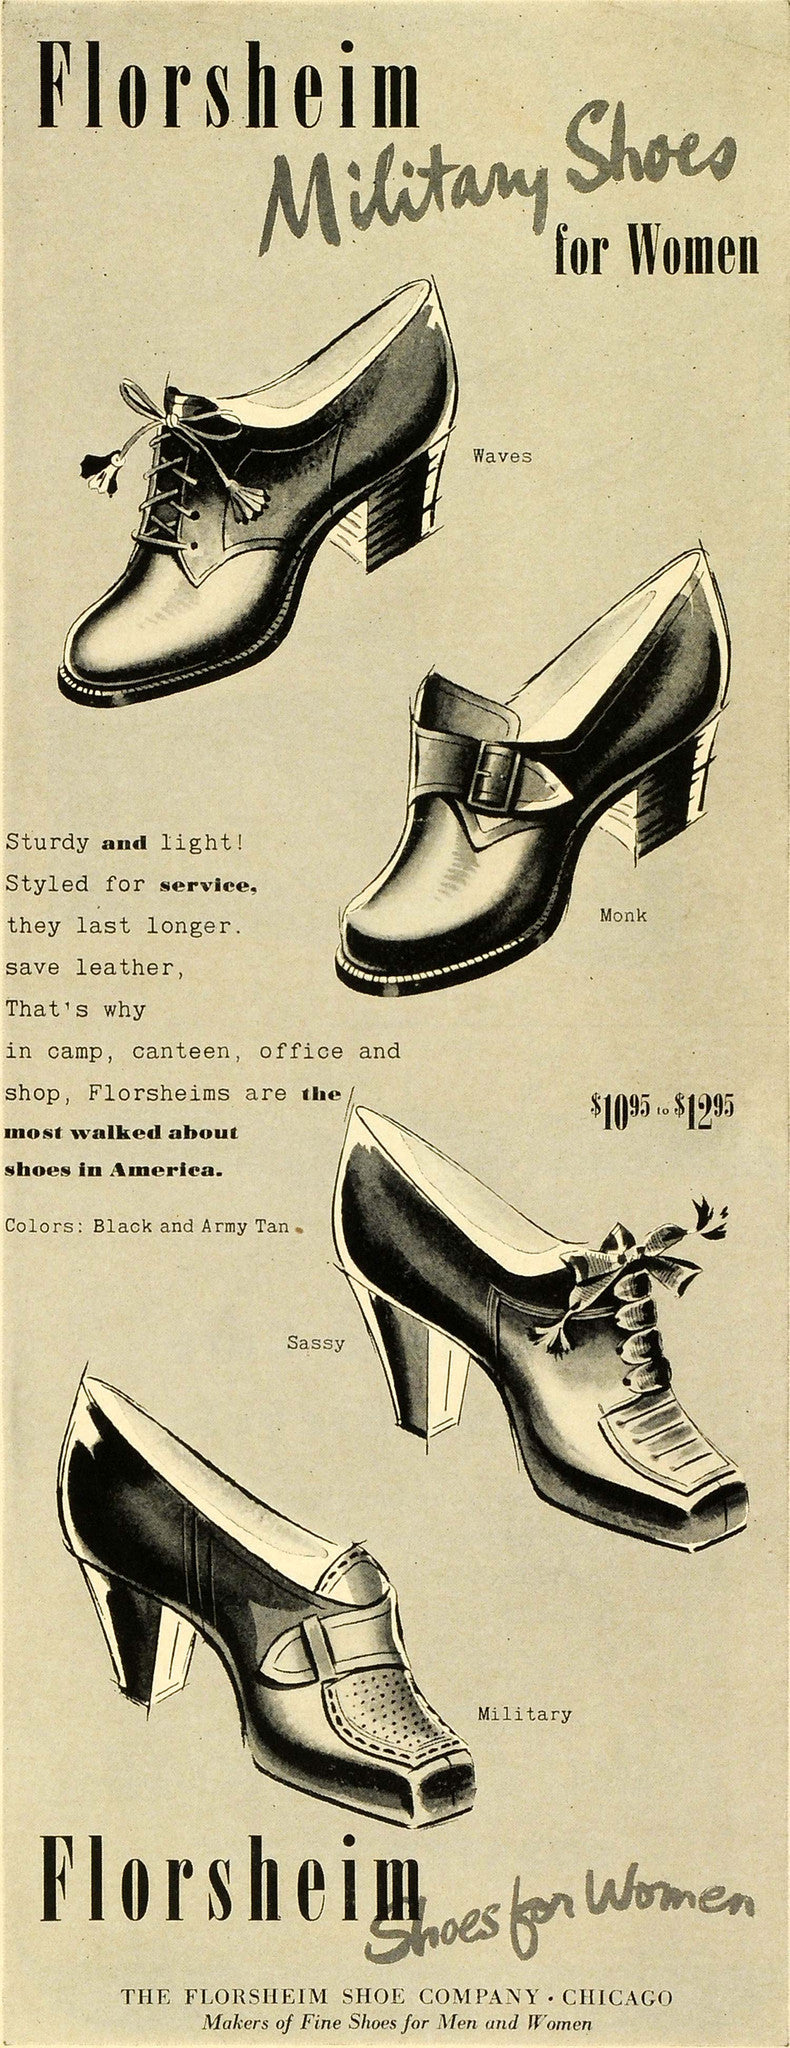 1942 Ad Florsheim Military Shoes Women Fashion World War II Heels Laces LF5 - Period Paper
